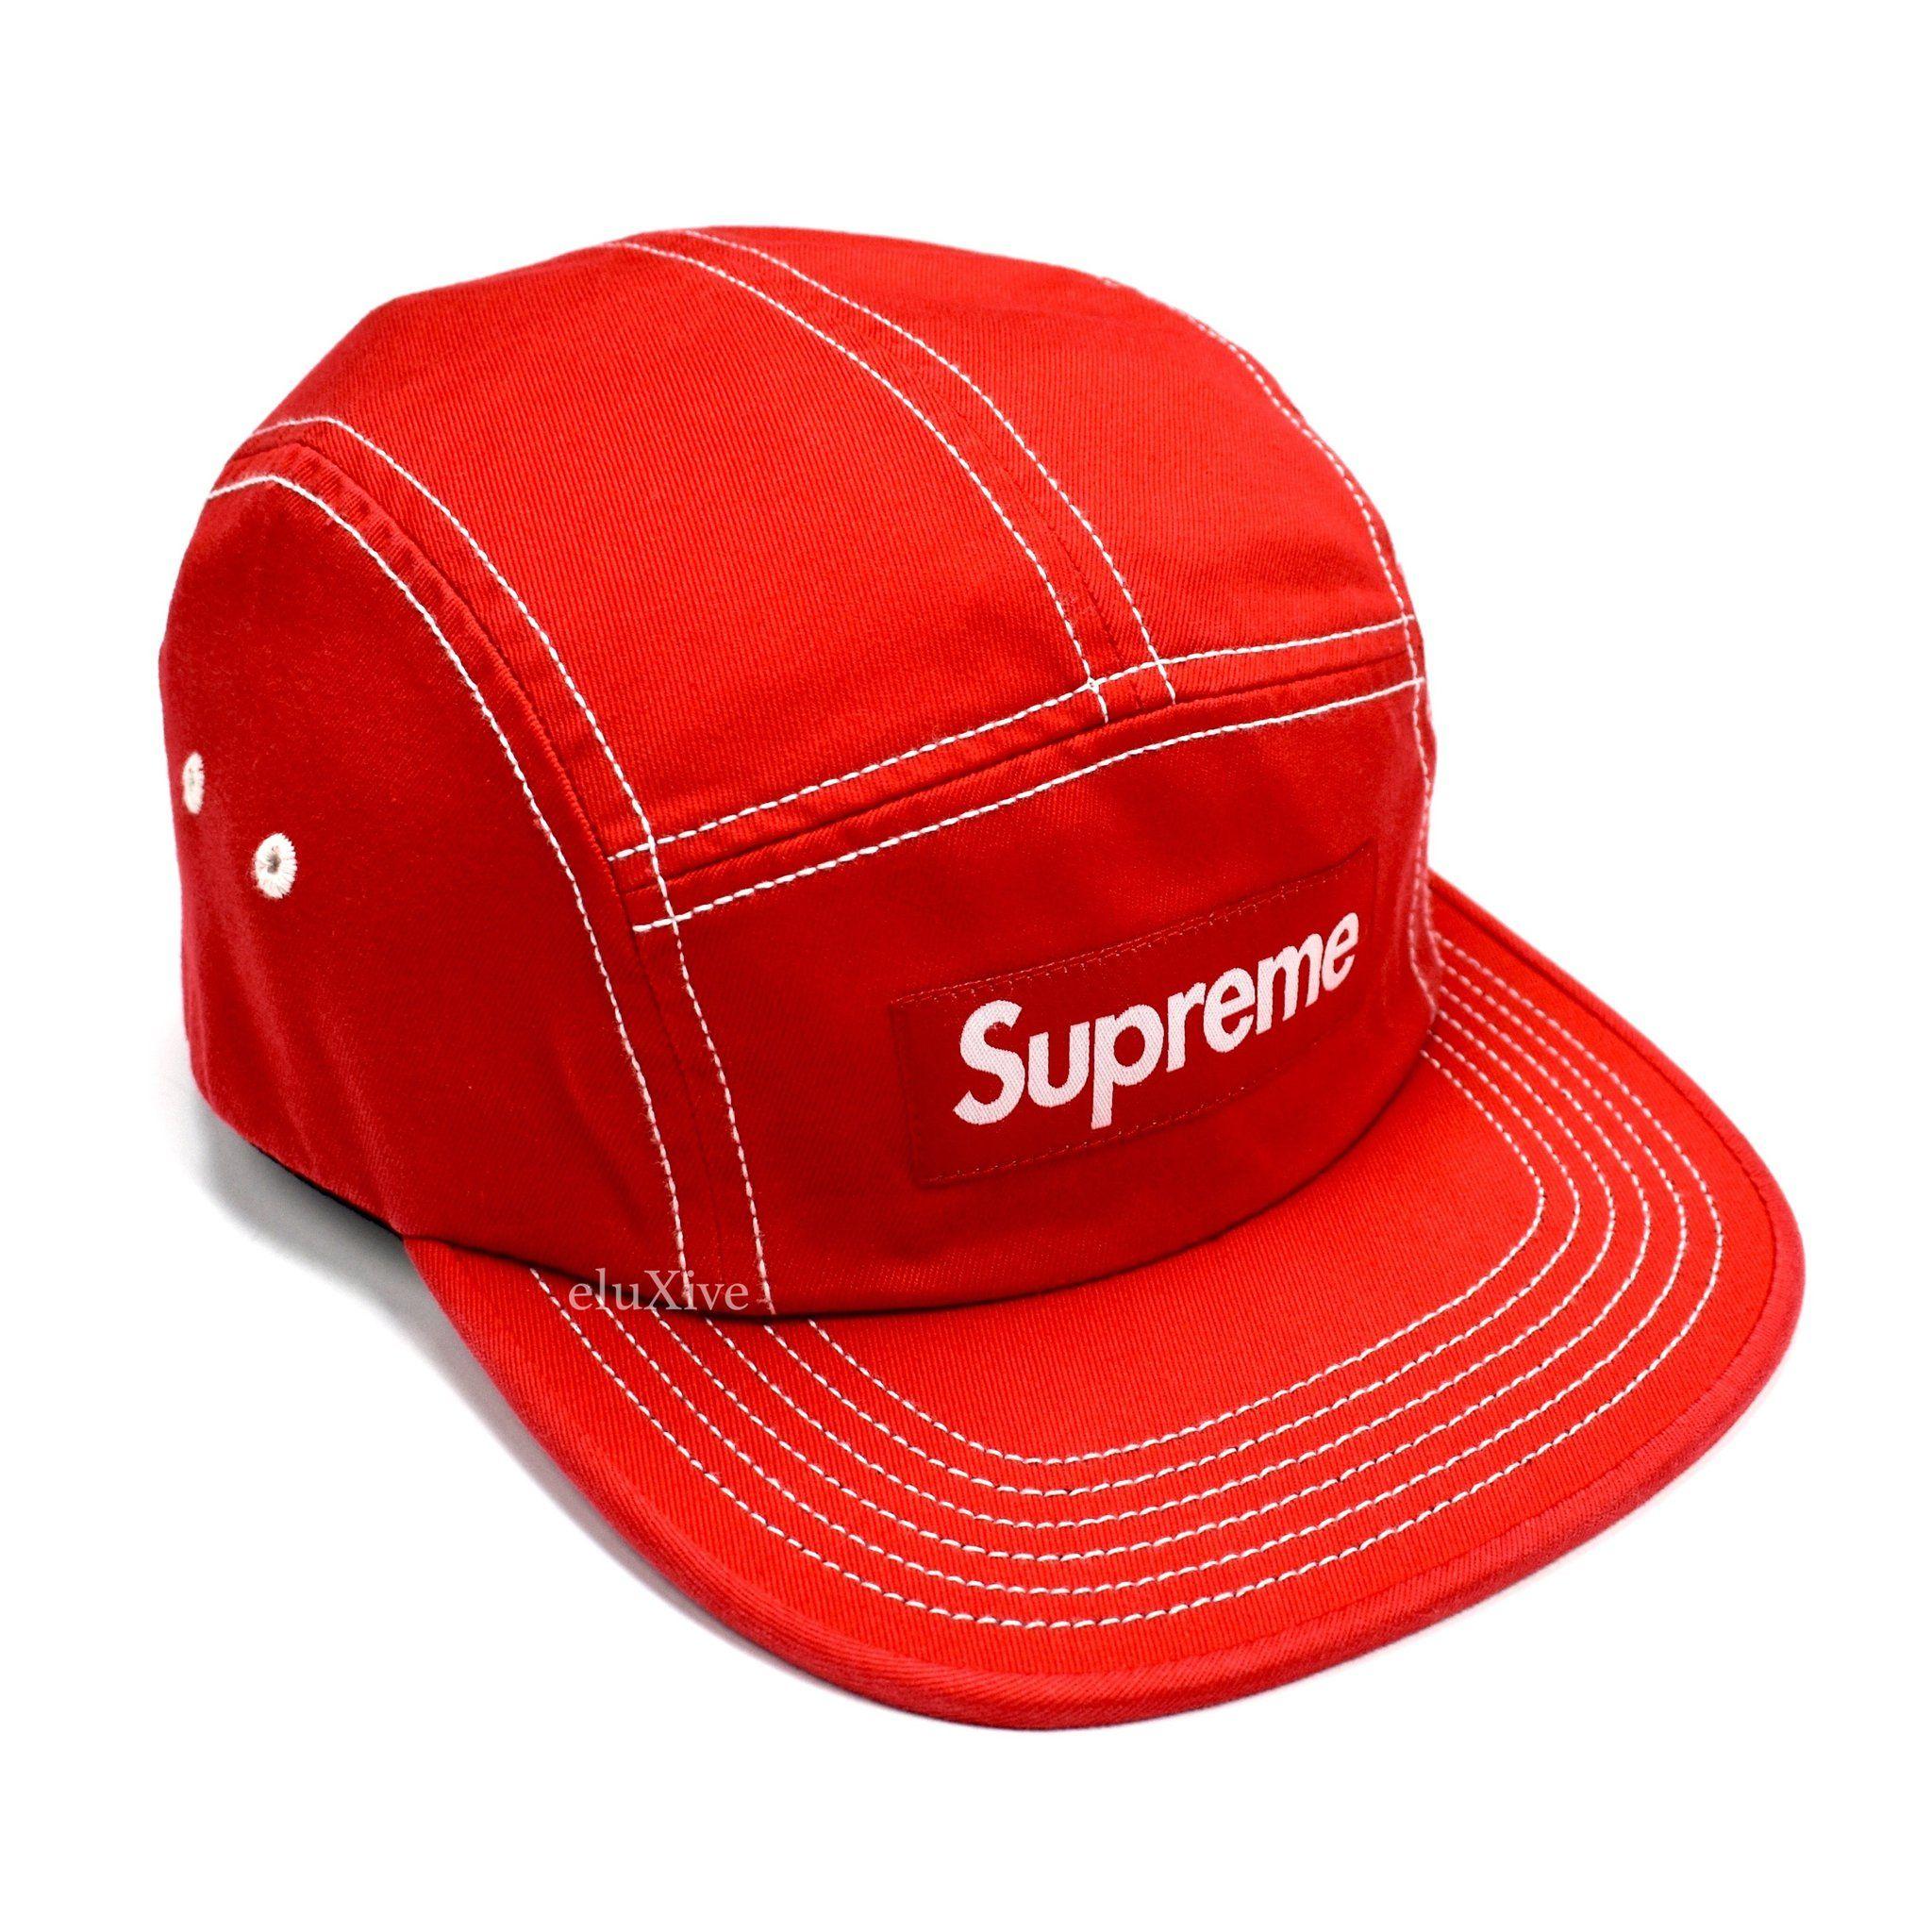 White and Red Box Logo - Supreme Red Box Logo White Contrast Stitch Camp Cap Hat